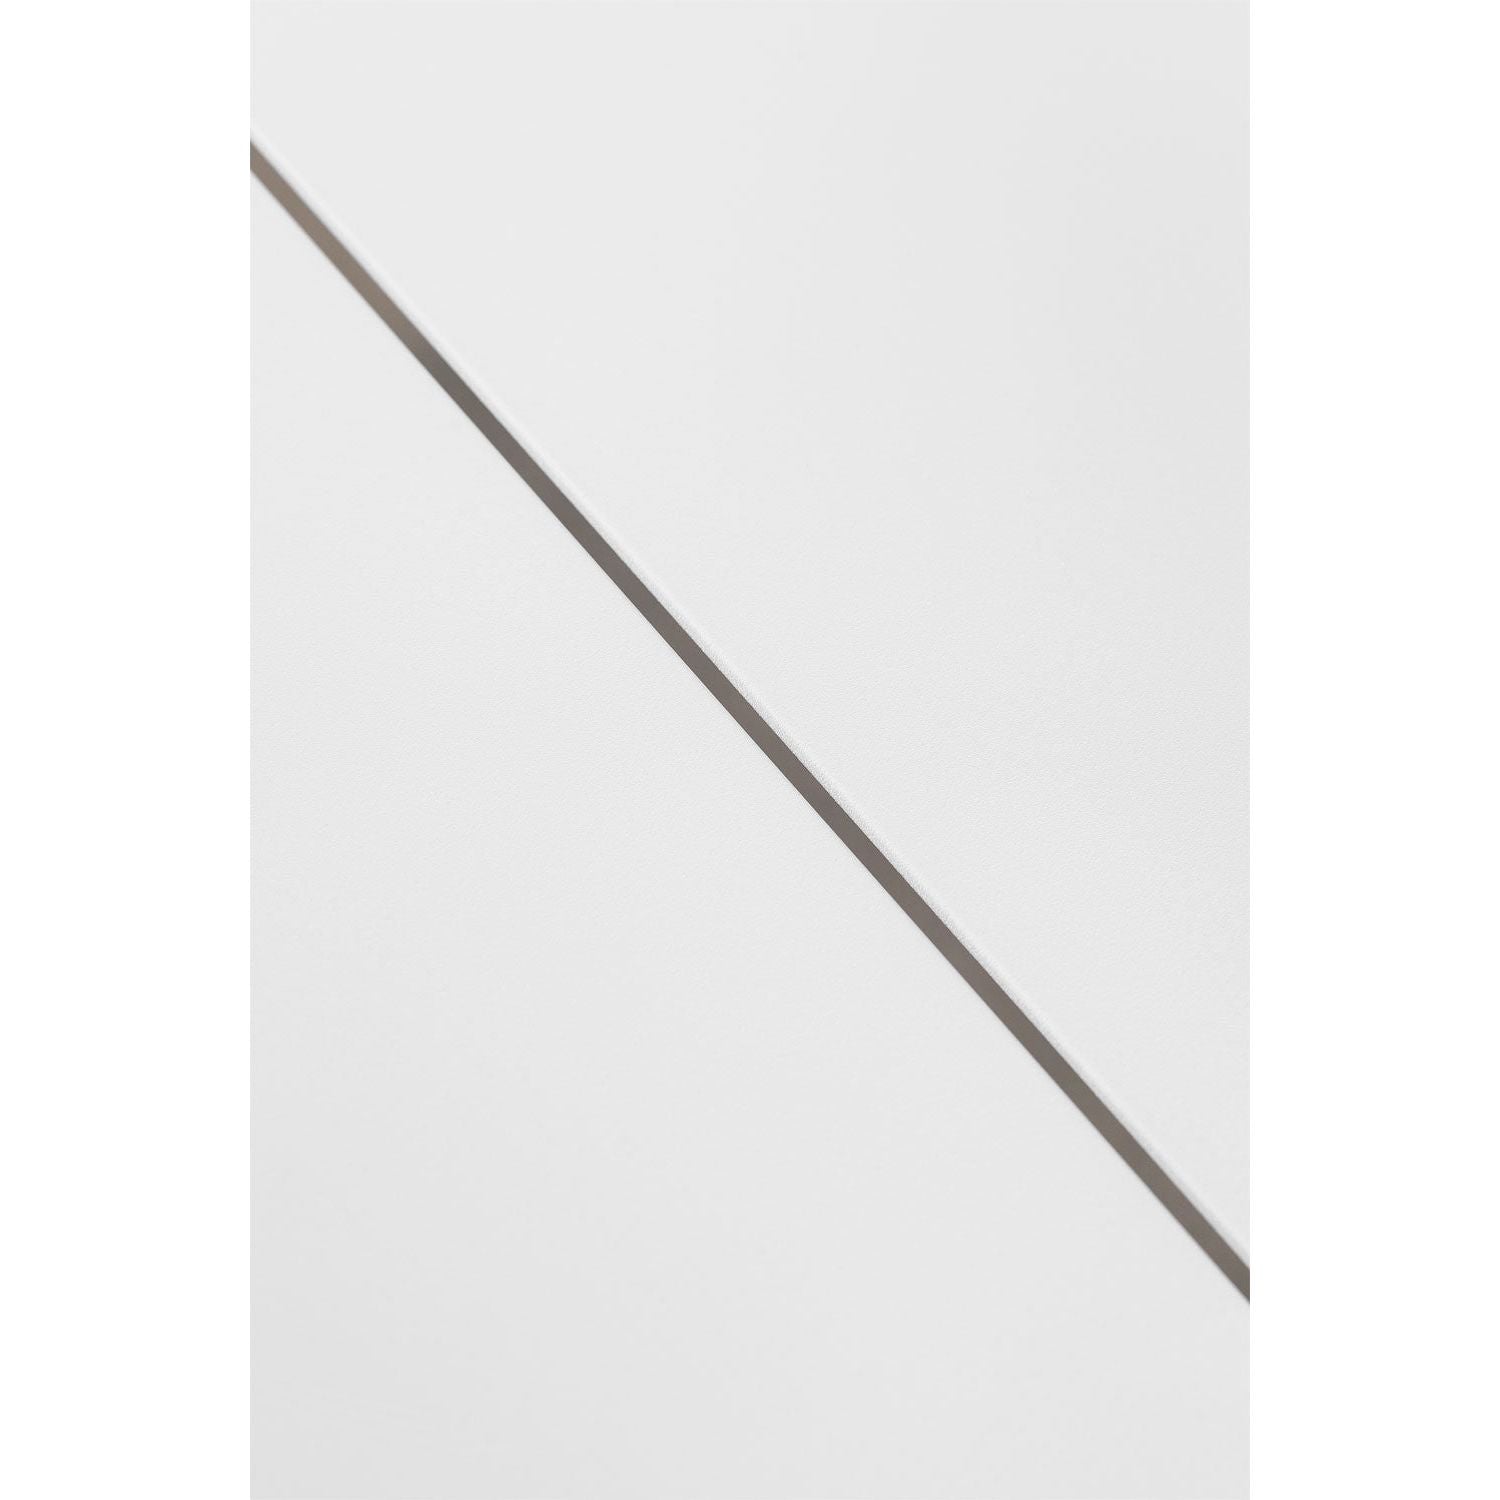 Lauko stalas KAYLEI, aliuminis, balta spalva, 180x90 cm